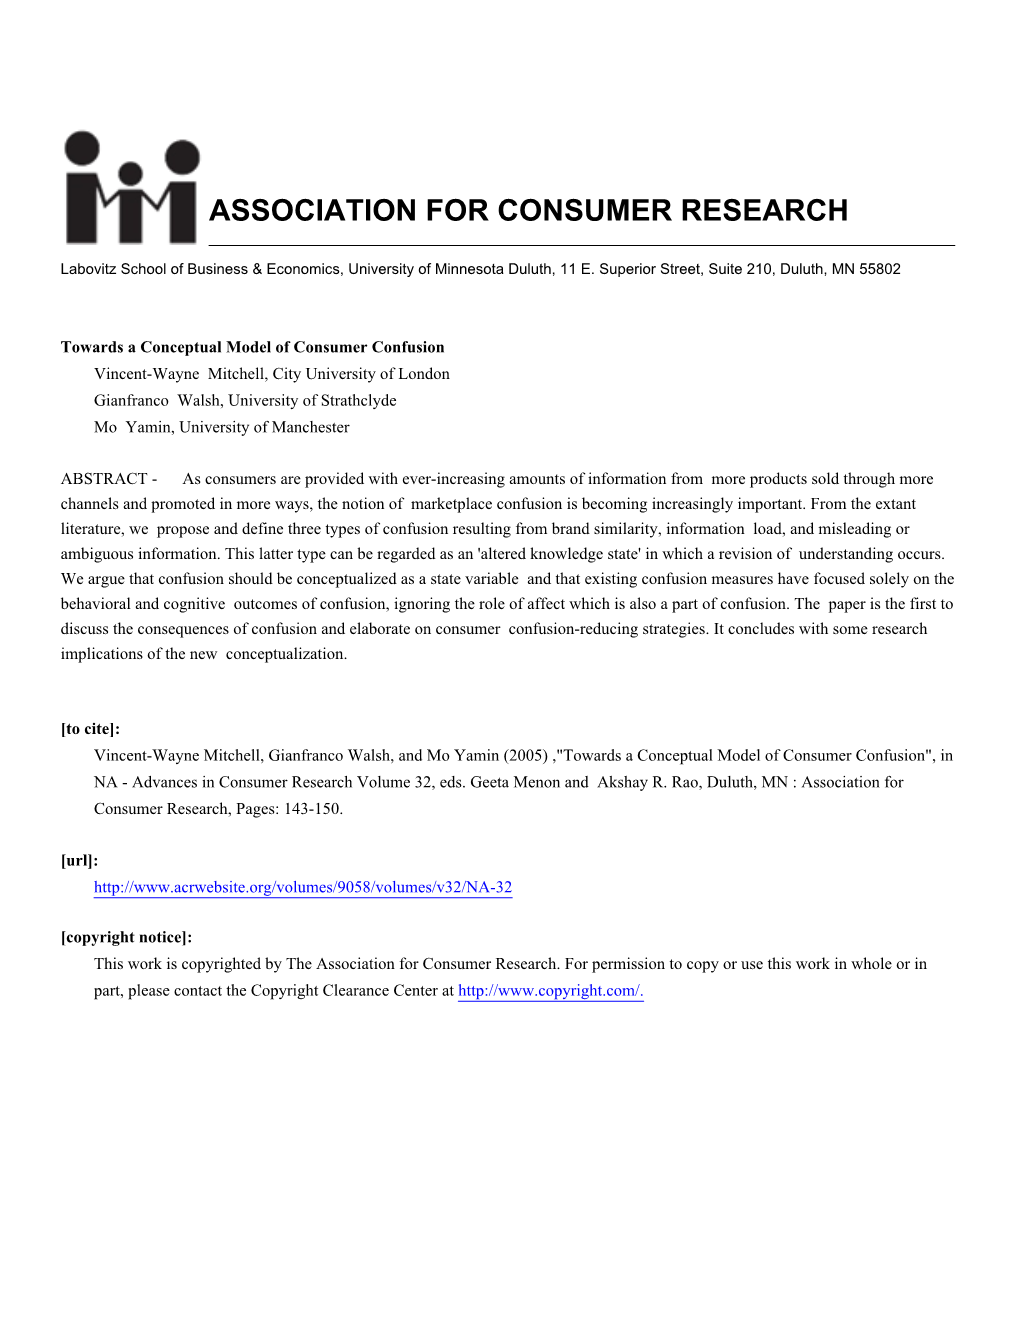 Towards a Conceptual Model of Consumer Confusion